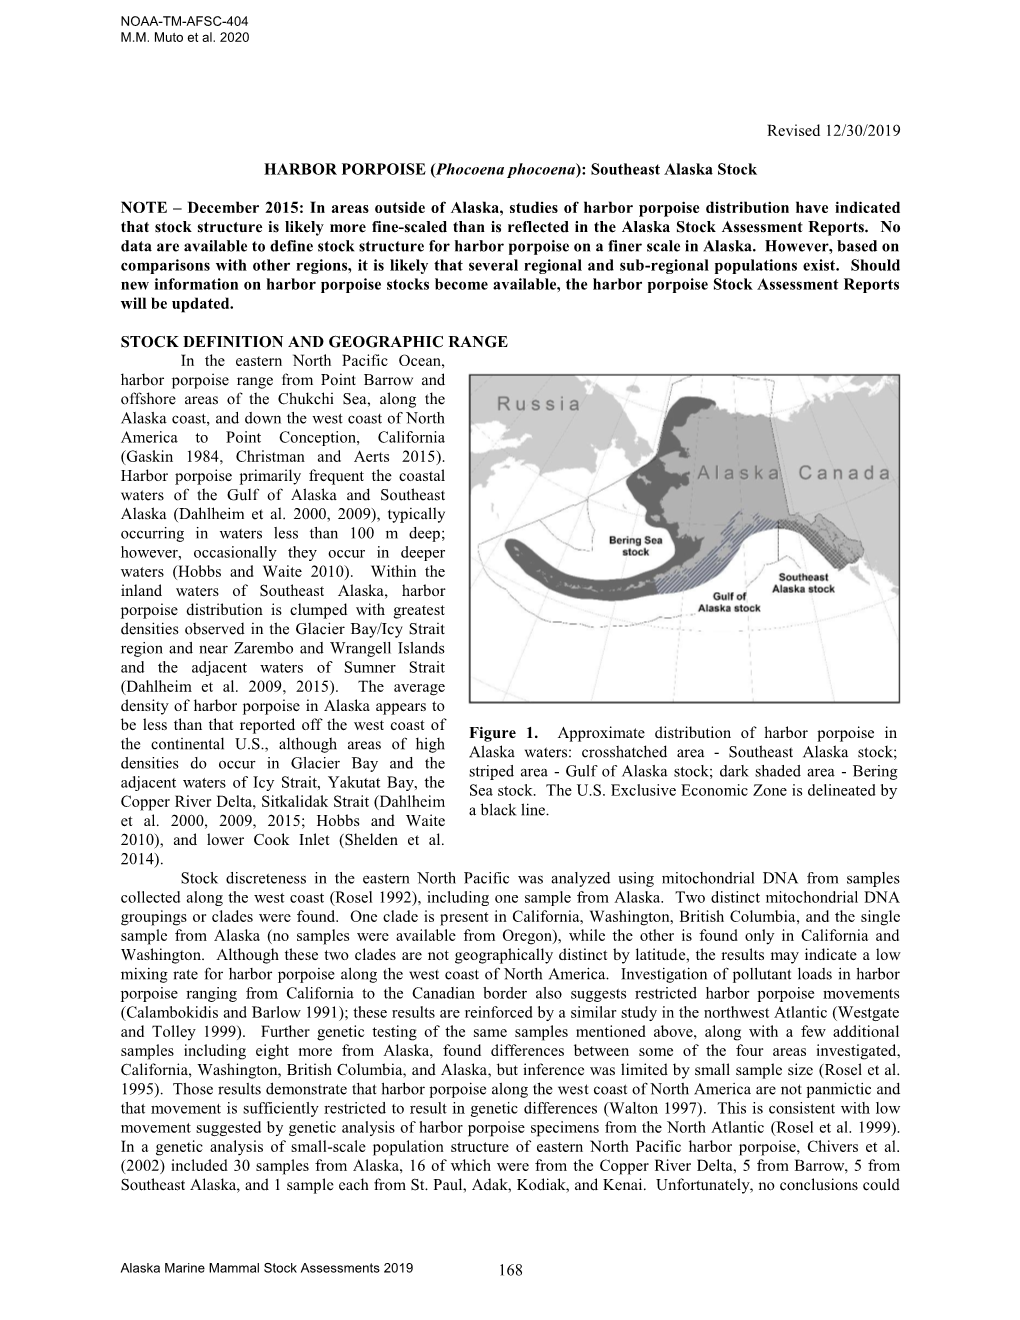 HARBOR PORPOISE (Phocoena Phocoena): Southeast Alaska Stock